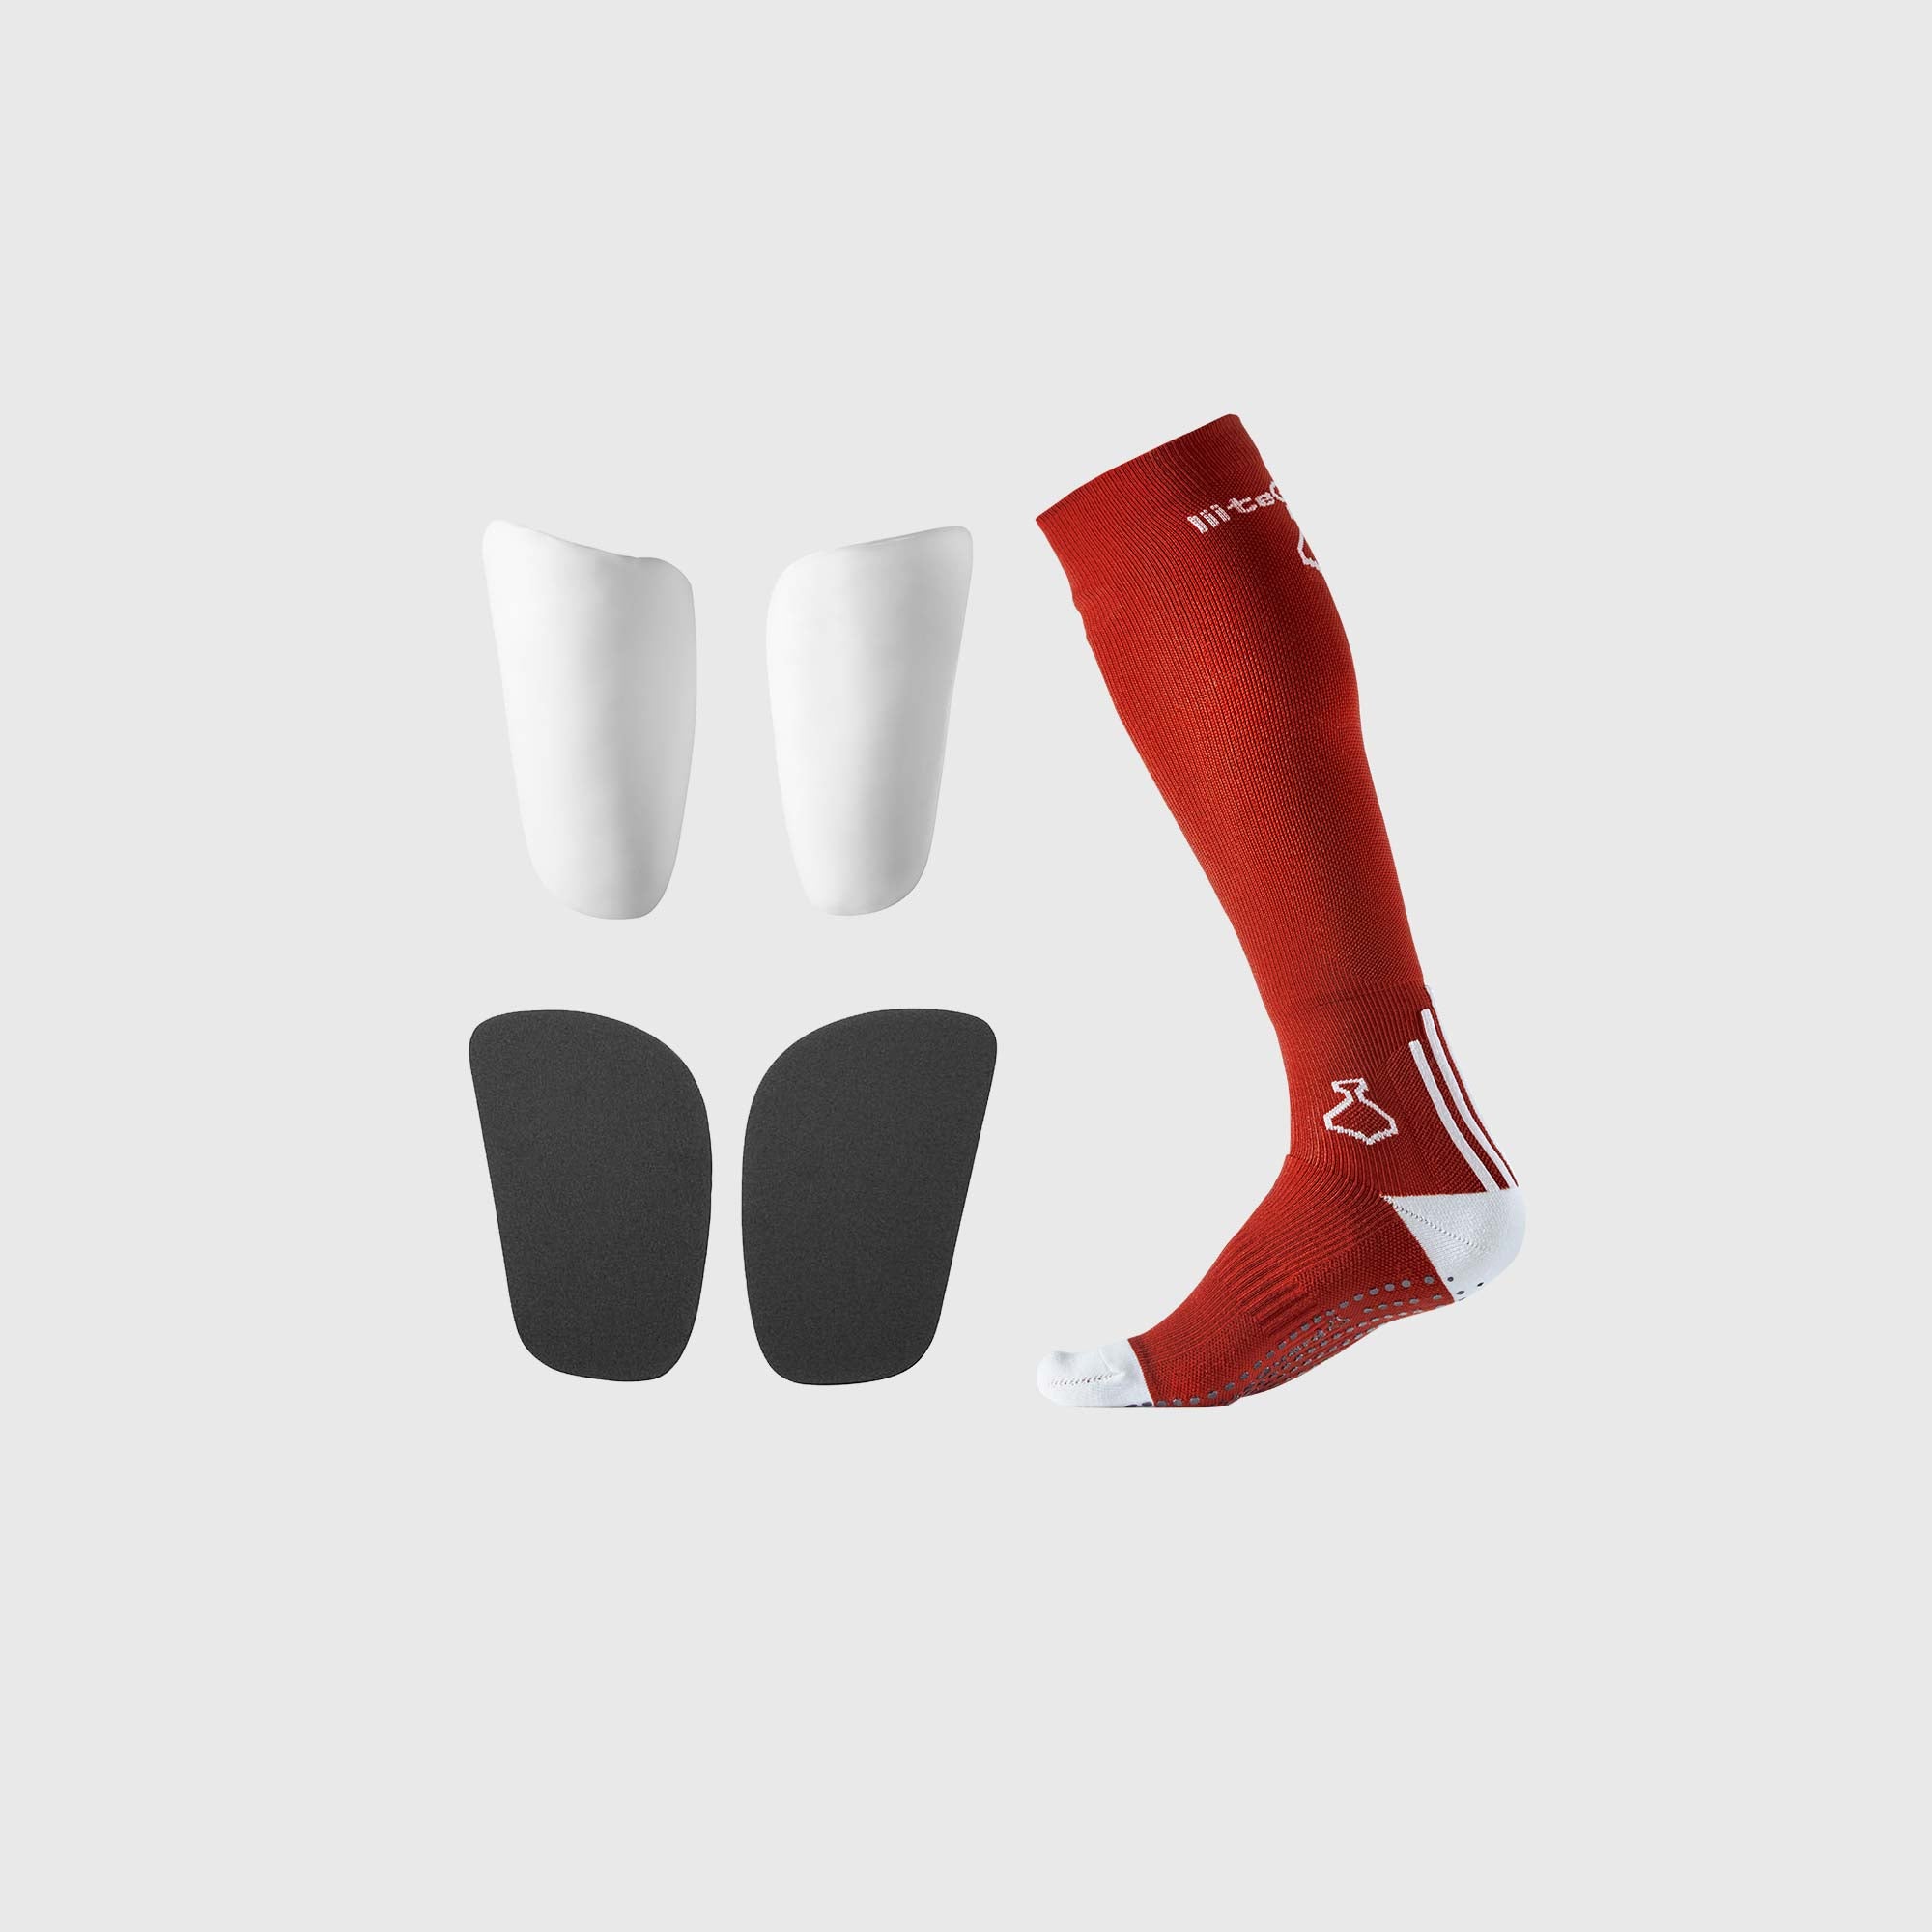 Liiteguard PERFORMANCE KIT Long socks RED